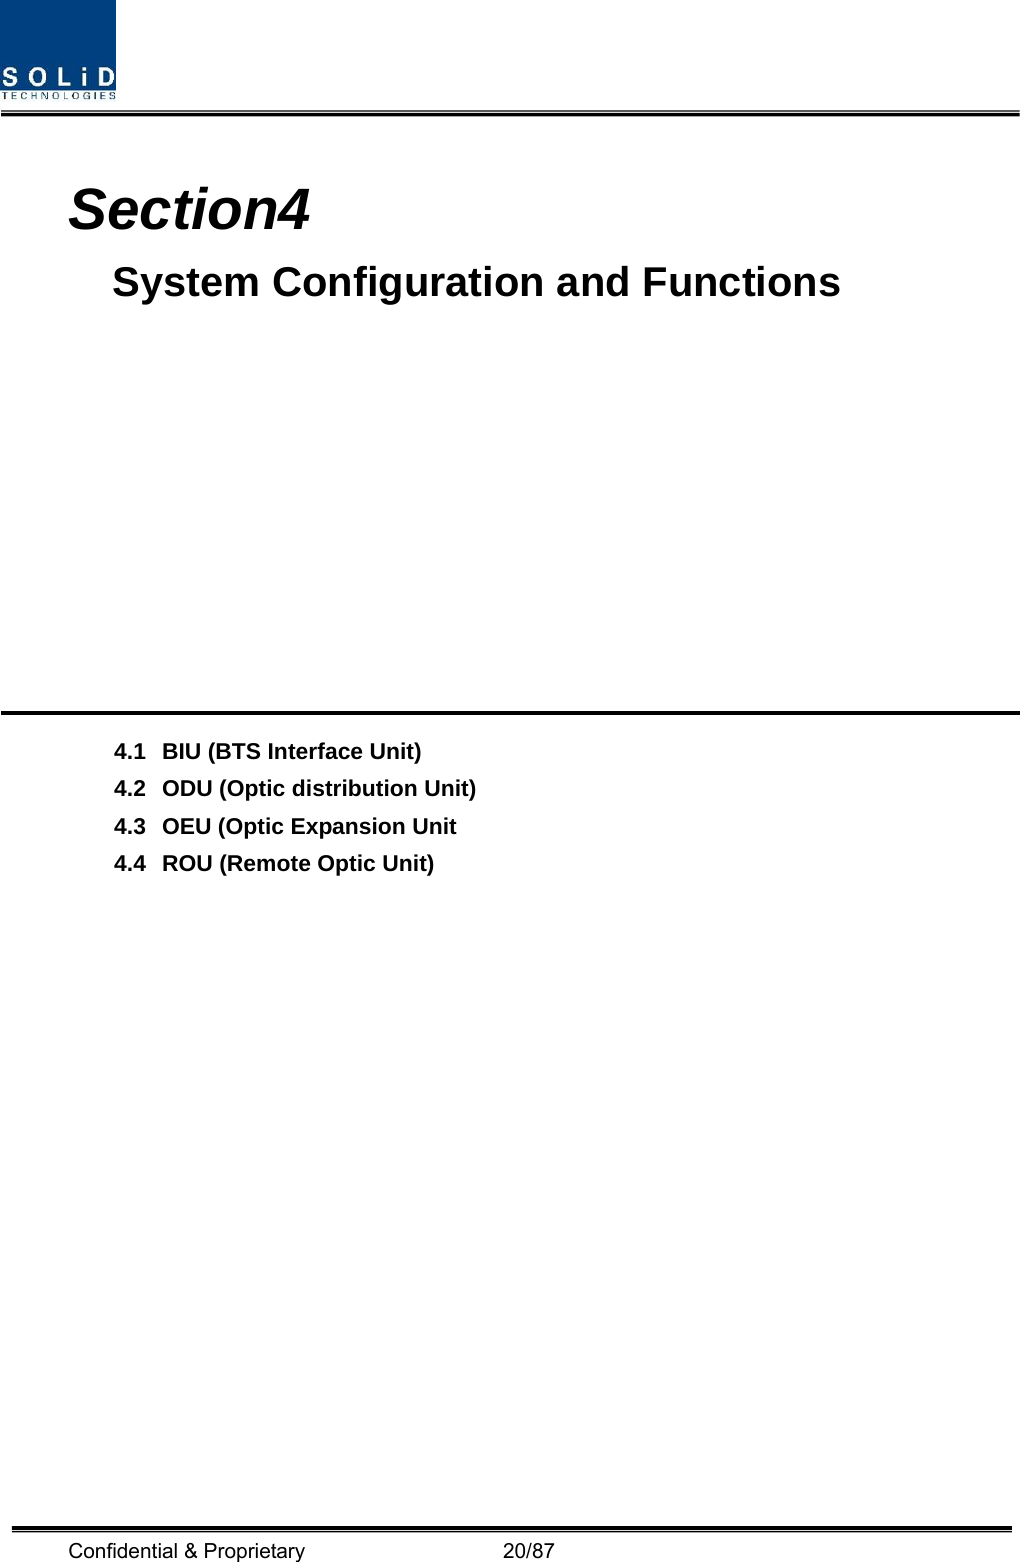  Confidential &amp; Proprietary                   20/87  Section4                               System Configuration and Functions            4.1 BIU (BTS Interface Unit)  4.2 ODU (Optic distribution Unit)  4.3 OEU (Optic Expansion Unit  4.4 ROU (Remote Optic Unit)                  